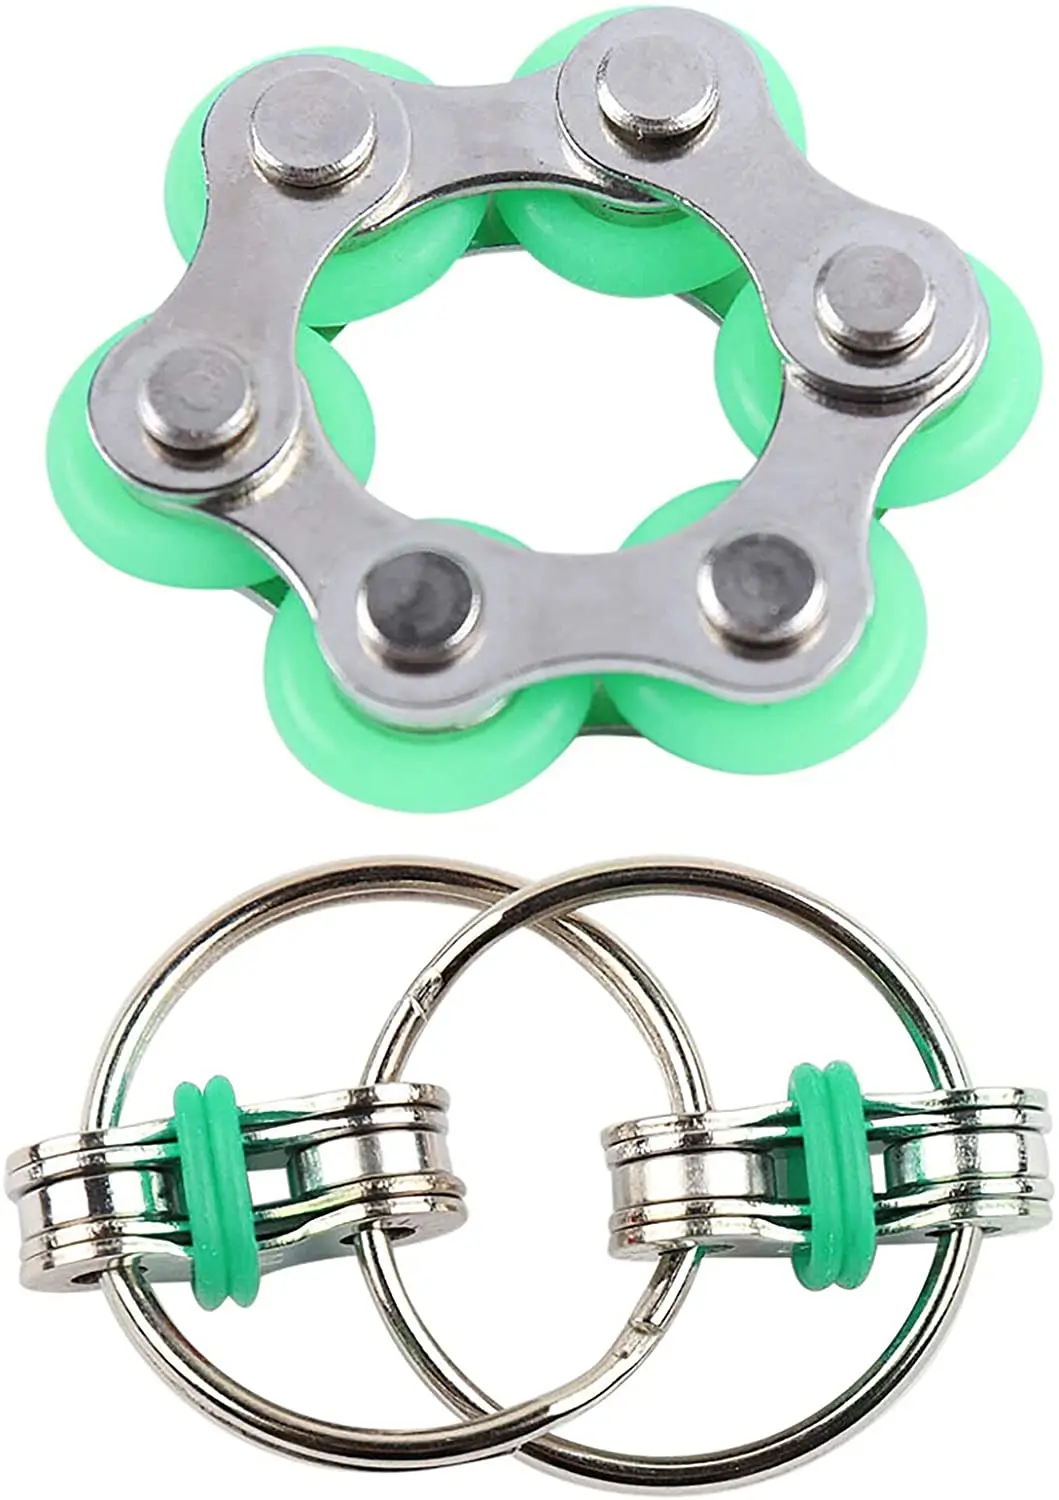 Fidget Bike Chain Ring Stress Relief Toy Blue Sensory ADHD Autism H4D6 